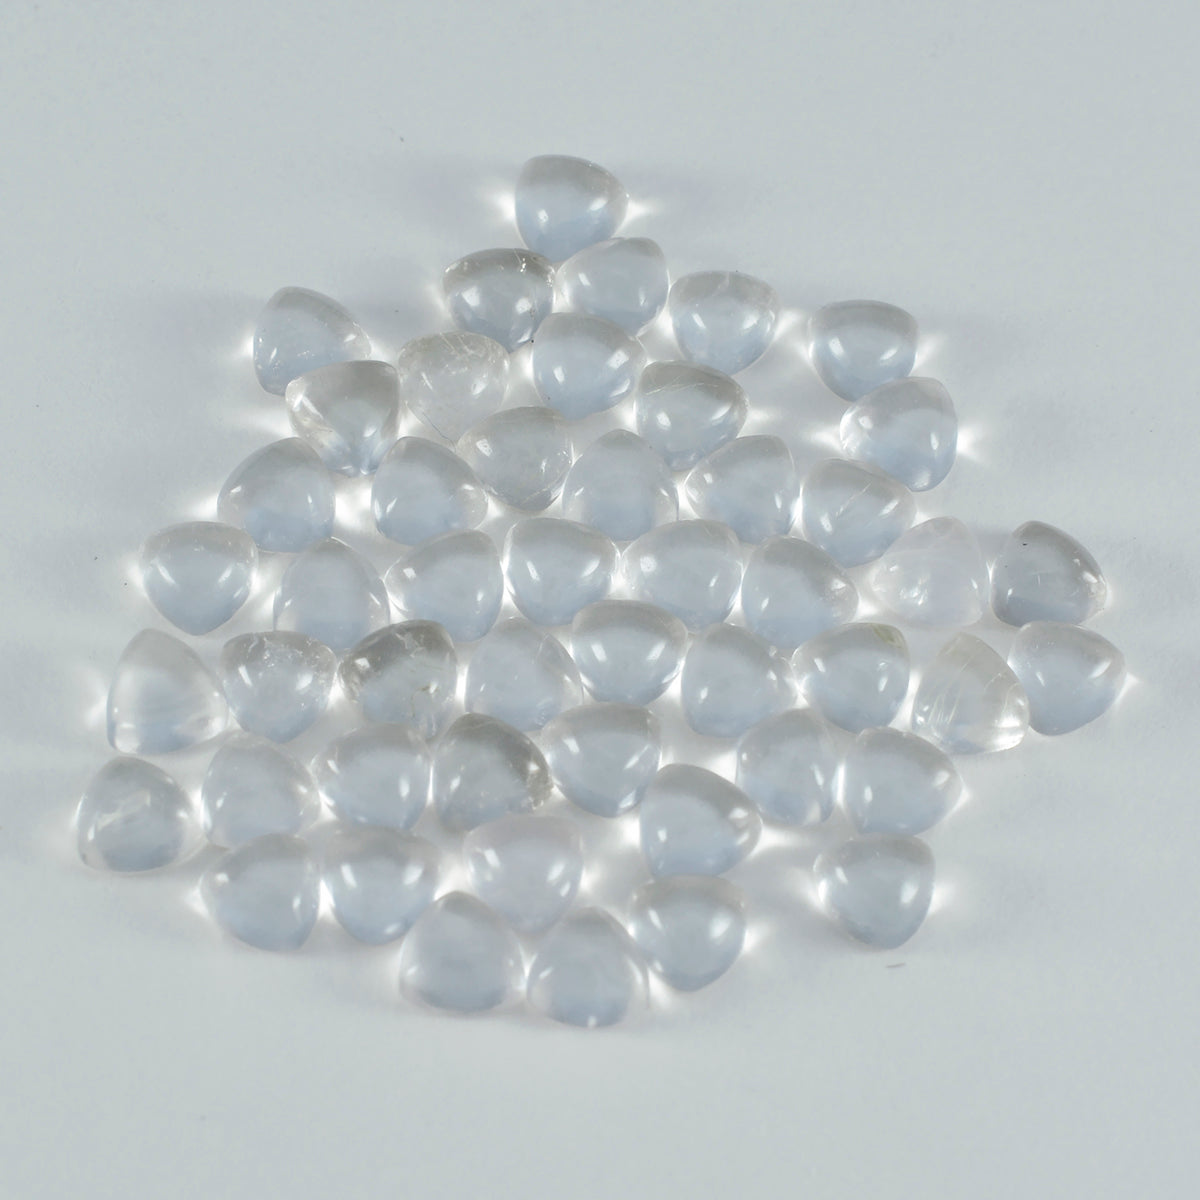 Riyogems 1PC White Crystal Quartz Cabochon 6x6 mm Trillion Shape fantastic Quality Gem